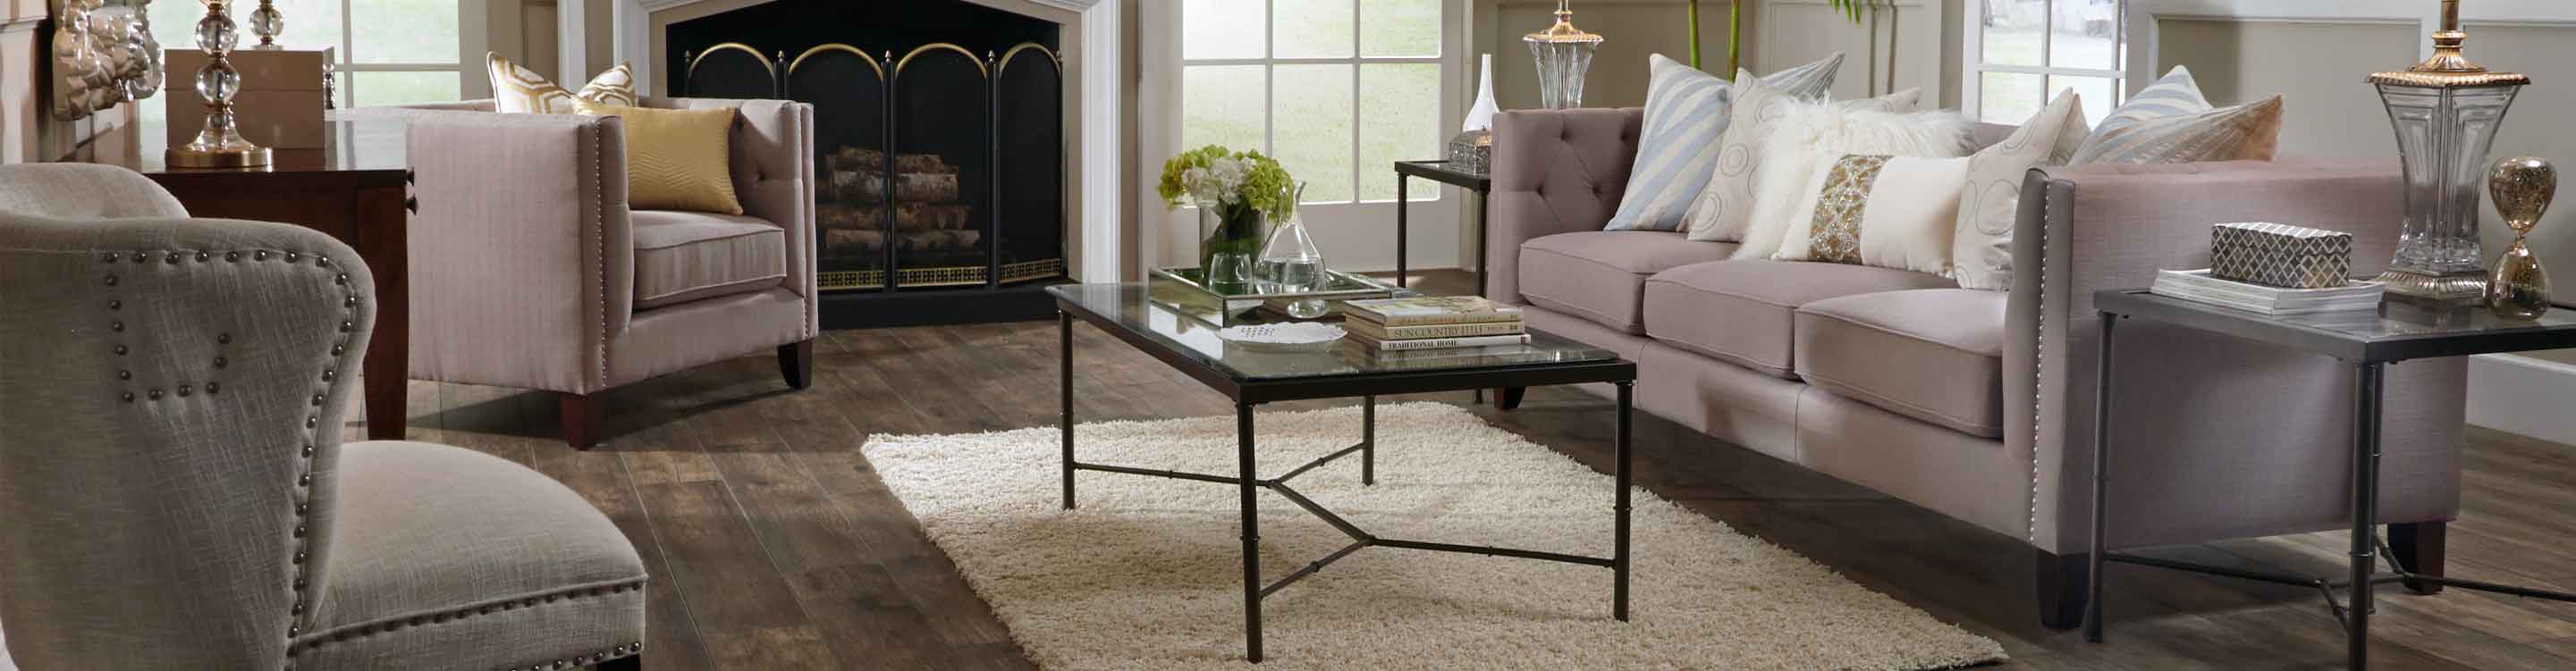 Darker wood look laminate floor living room with cream rug 